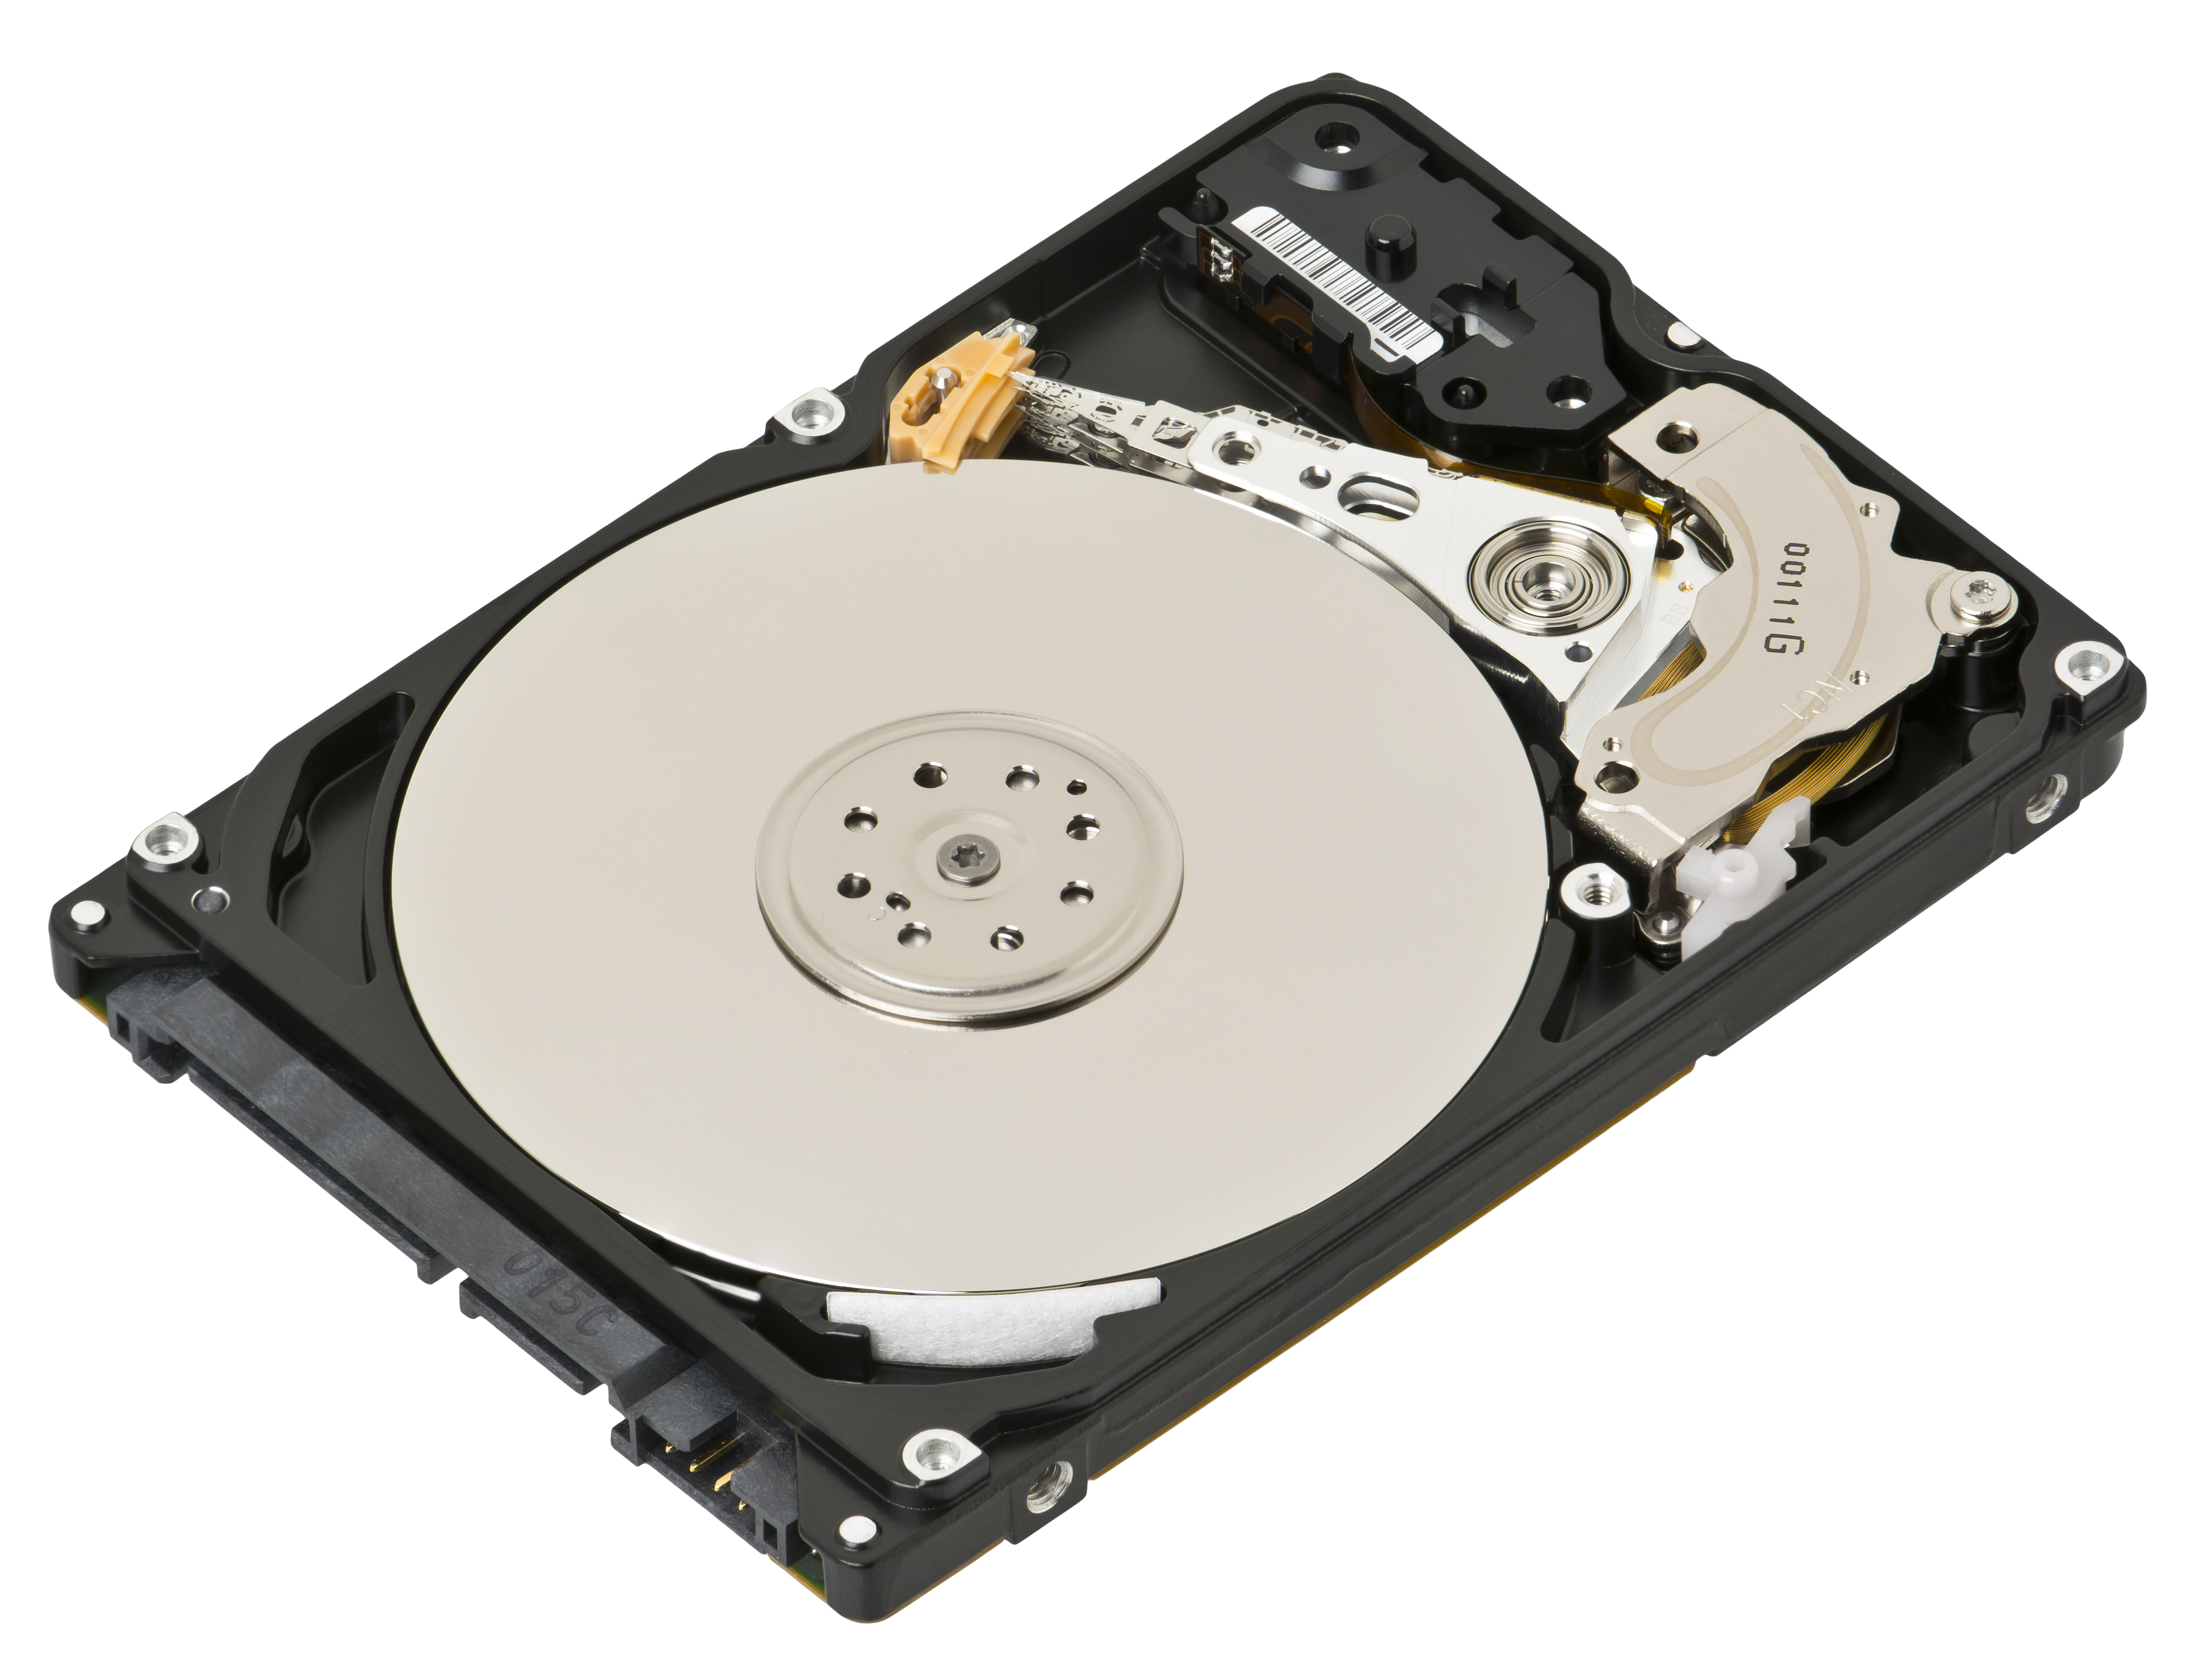 Dell N0785 hard disk drive 80GB 3.5 inch IDE 7200RPM (0N0785)